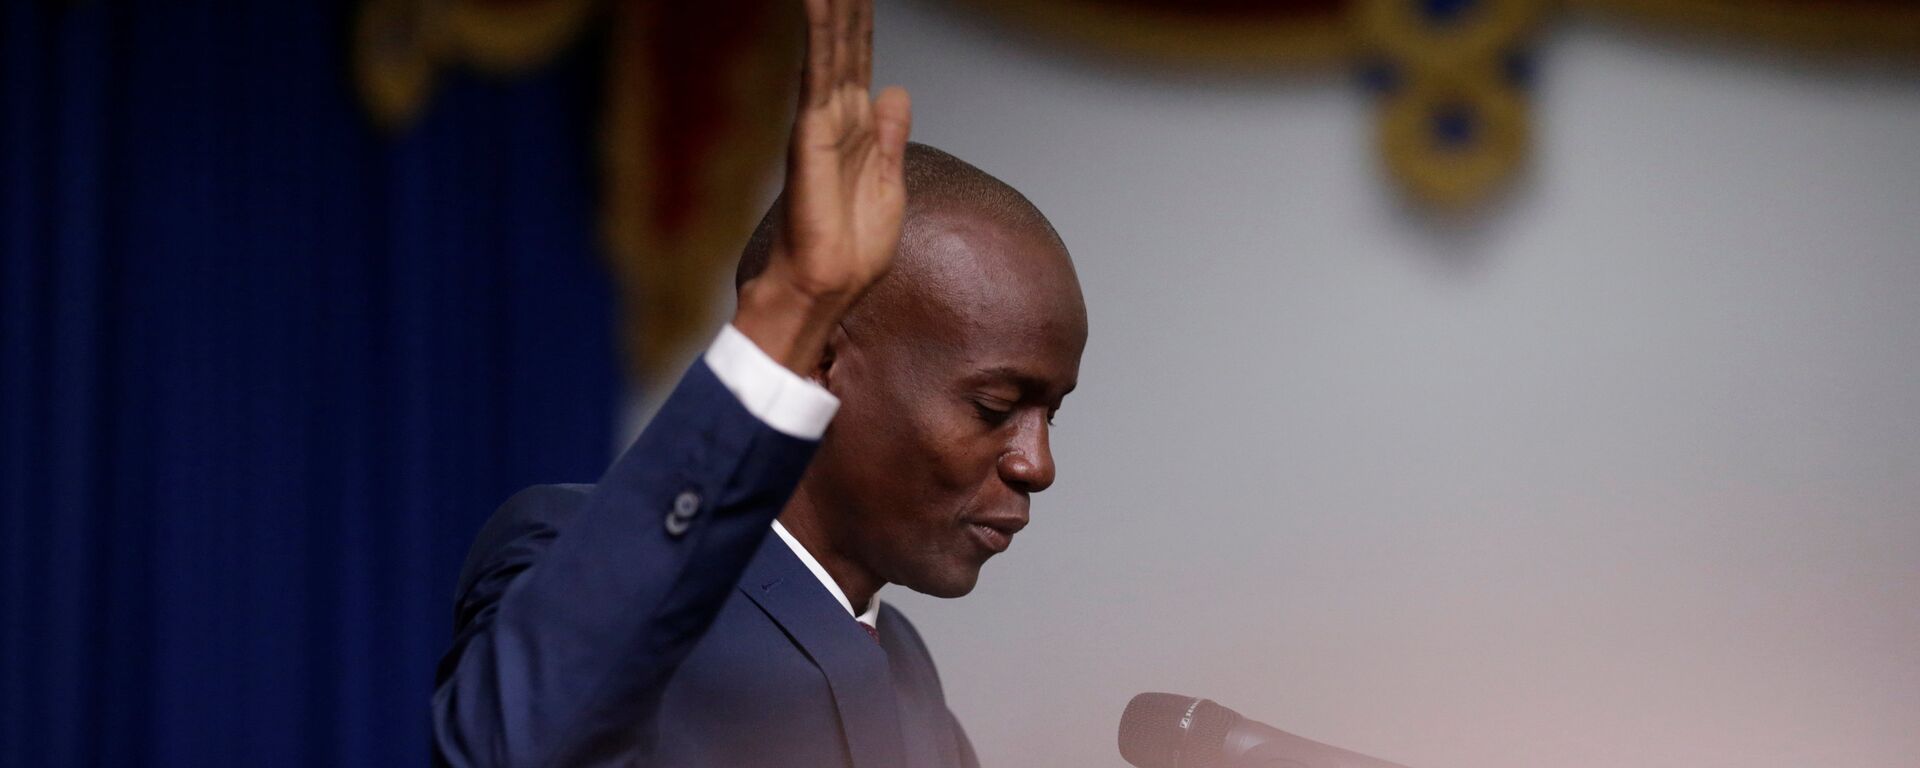 Haitian President Jovenel Moise takes the oath of office during his inauguration in Port-au-Prince, Haiti February 7, 2017 - Sputnik Mundo, 1920, 22.04.2022